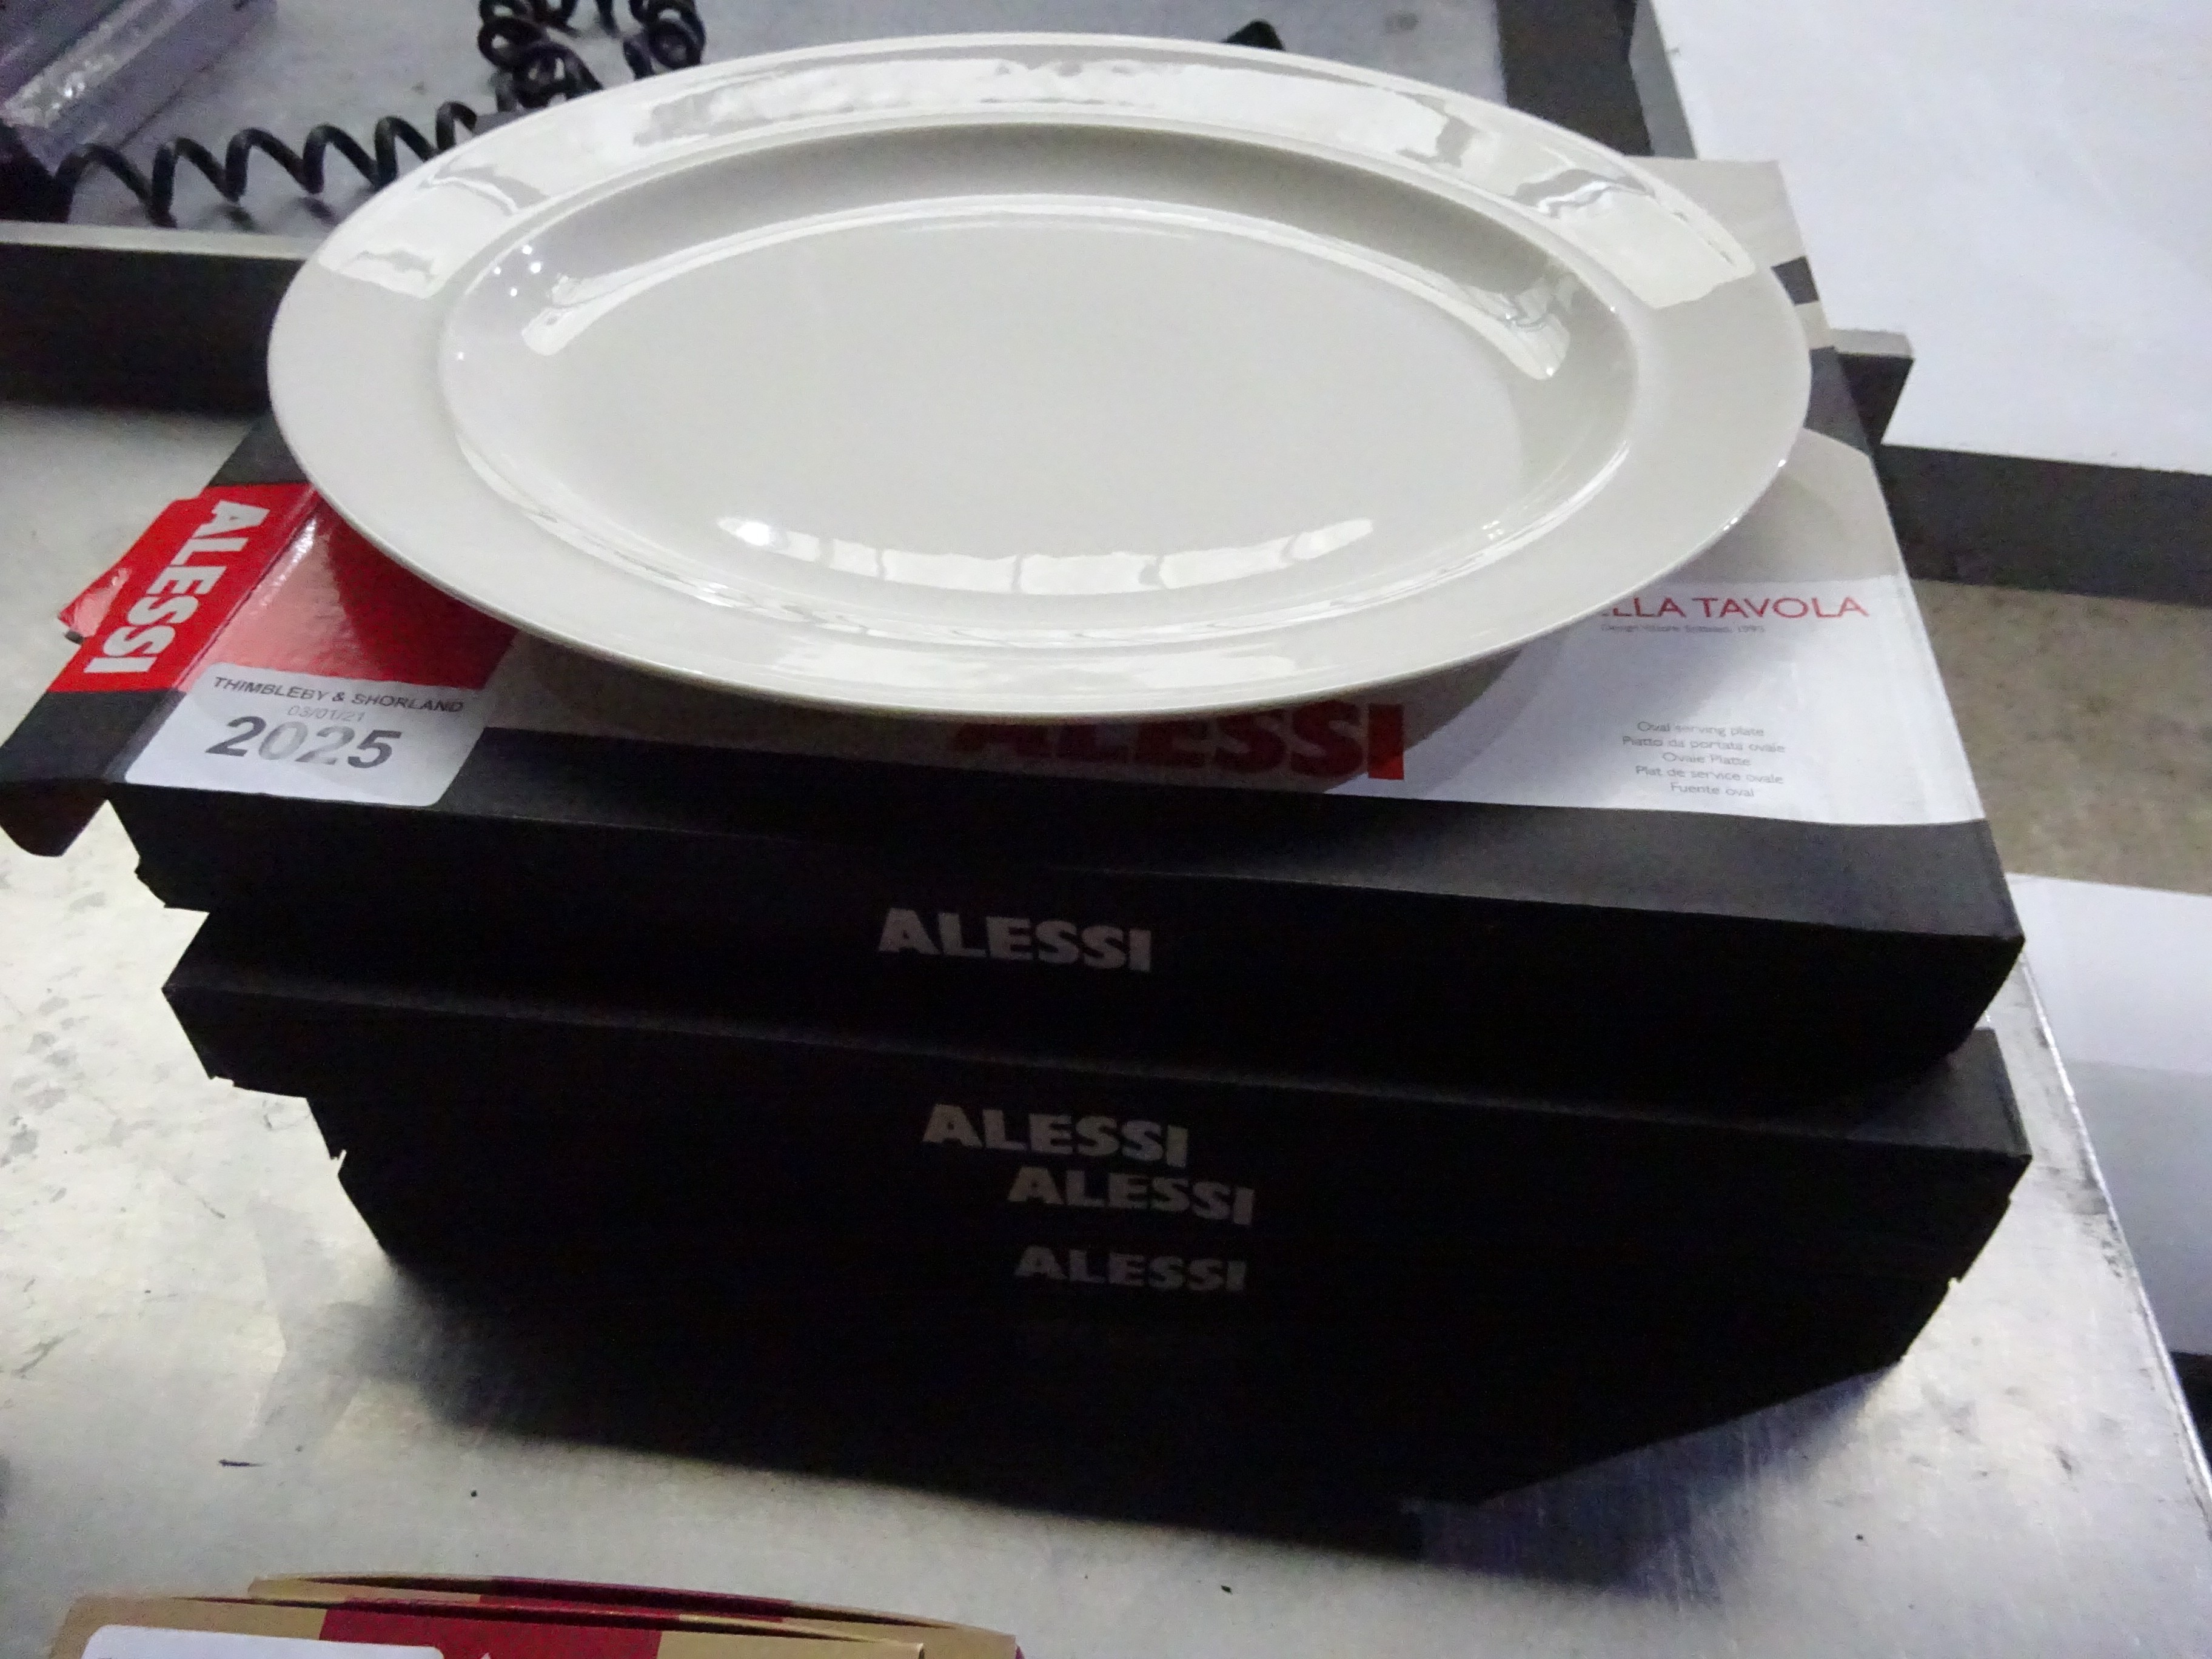 4 Alessi serving plates.